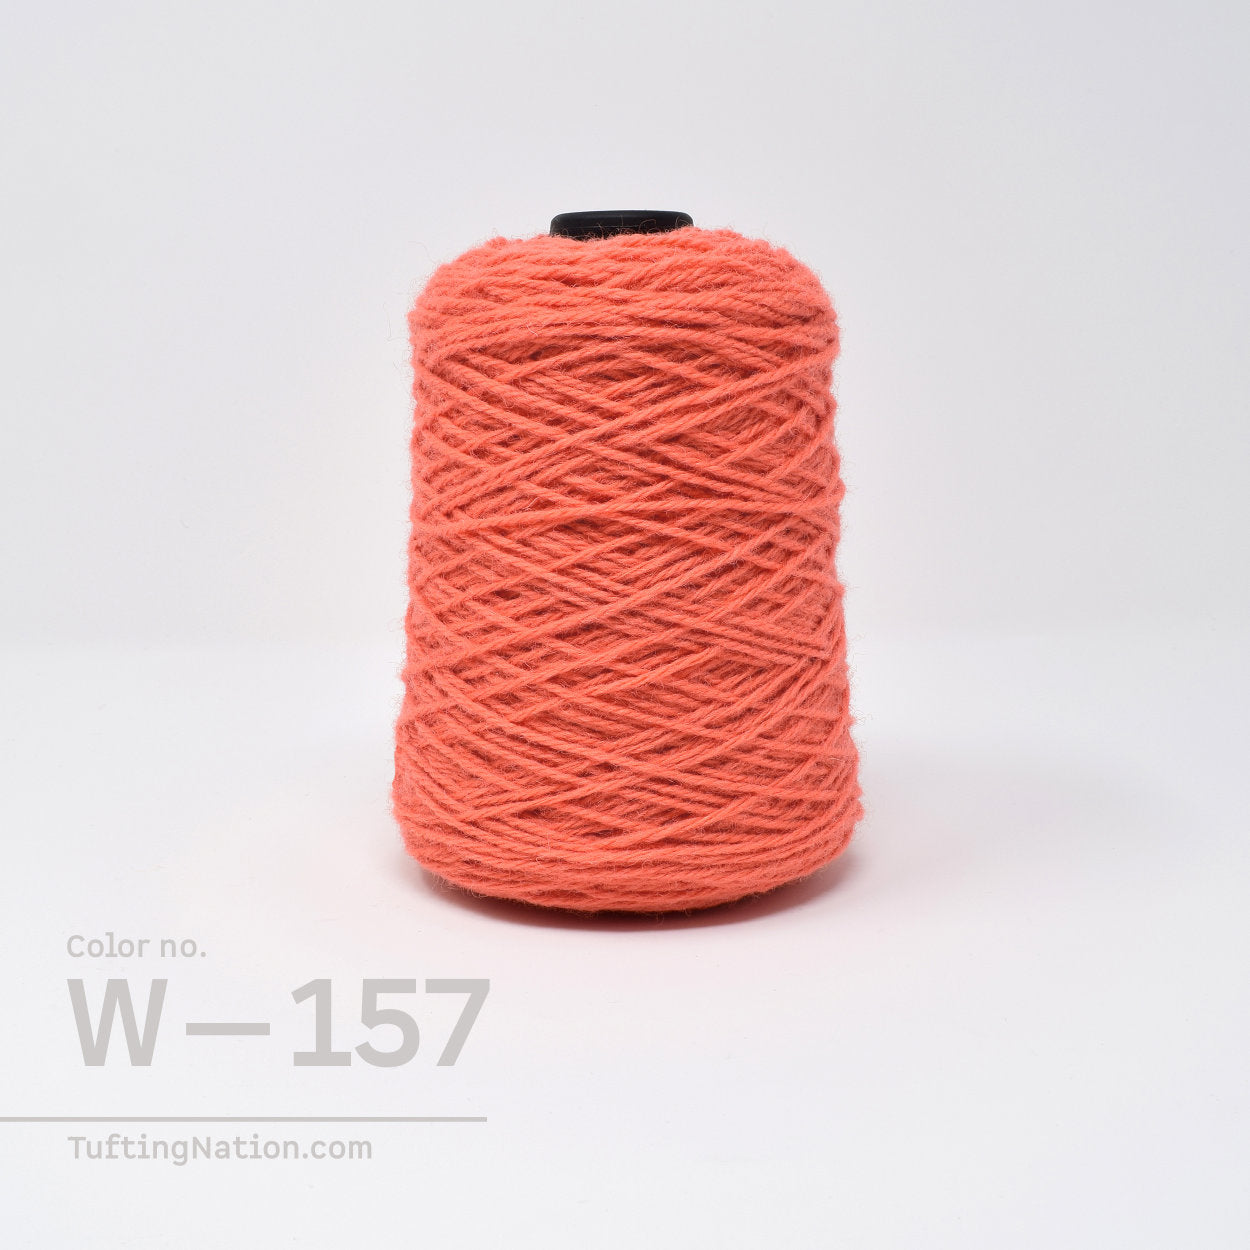 Orange Wool Rug Yarn on Cones for Tuffting Gun | TuftingNation